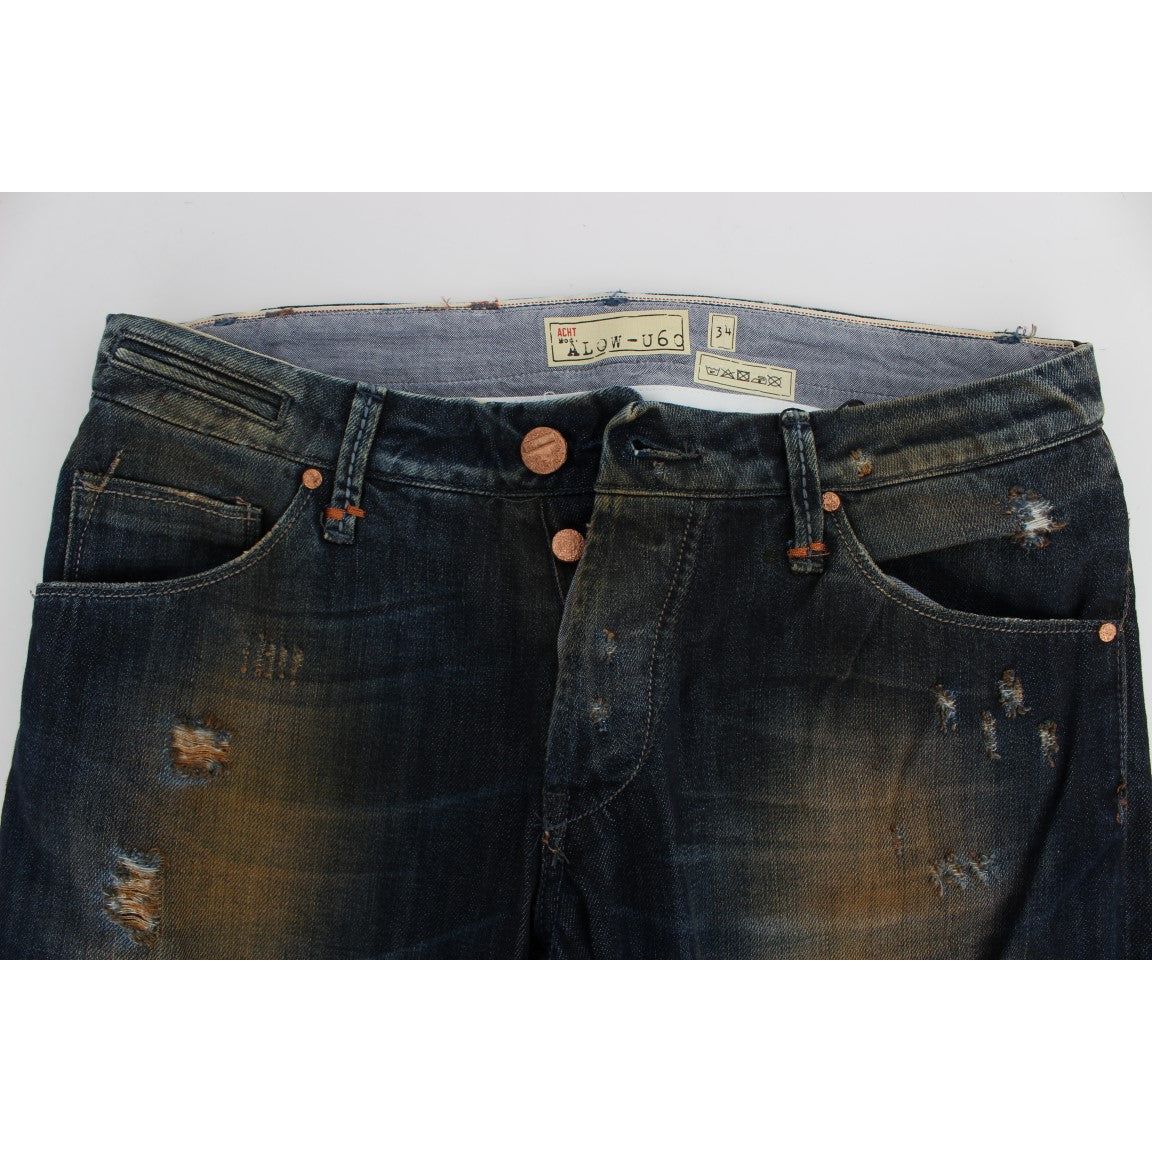 Acht Elegant Straight Fit Men's Denim Jeans blue-wash-cotton-regular-straight-fit-jeans-1 298995-blue-wash-cotton-regular-straight-fit-jeans-2-3.jpg